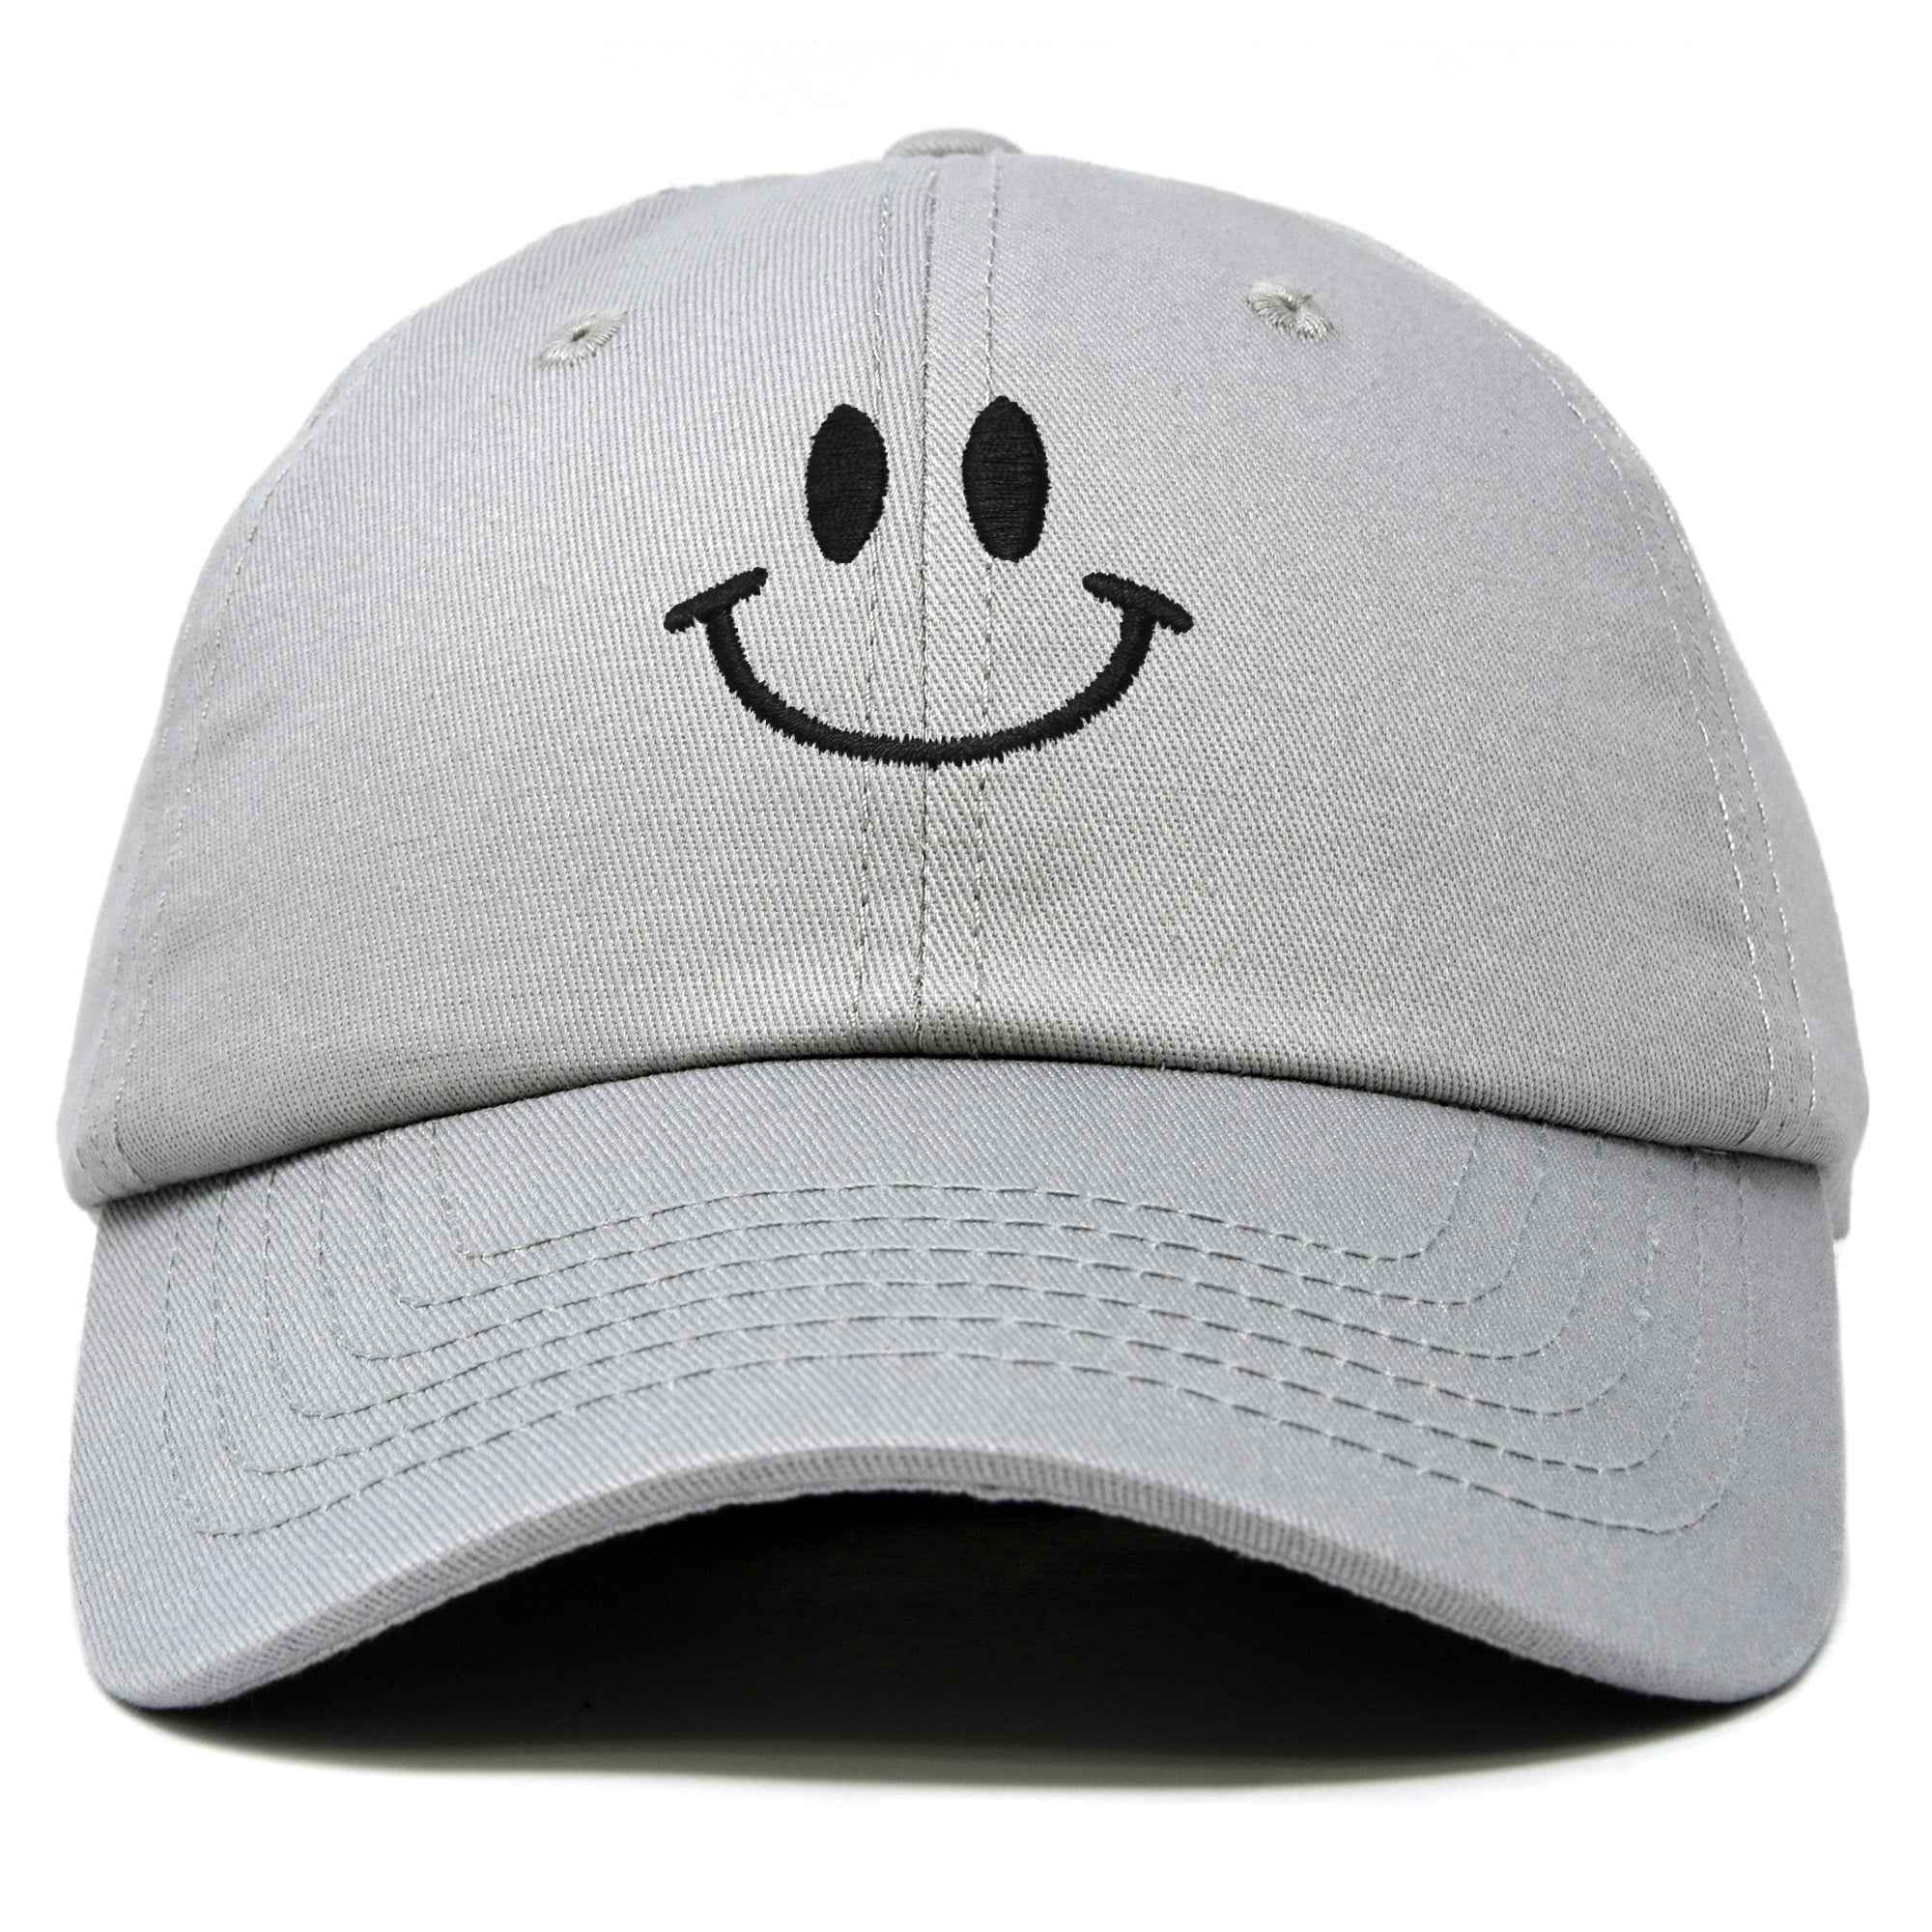 Baseball Cap Happy Smiling Dog Character Celebrates Birthday Adjustable Mesh Unisex Baseball Cap Trucker Hat Fits Men Women Hat